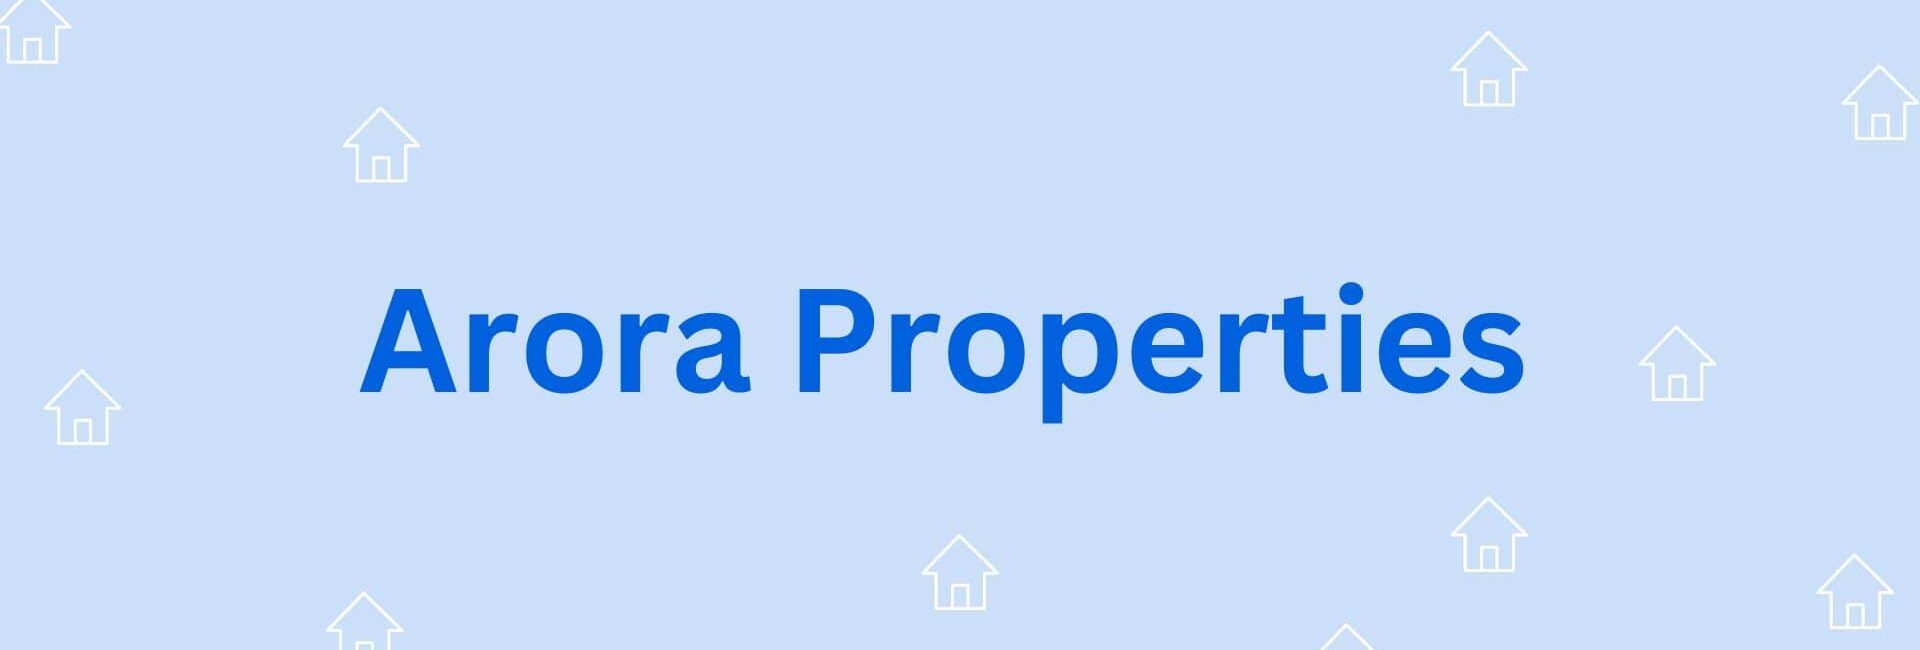 Arora Properties - real estate agent in Hisar